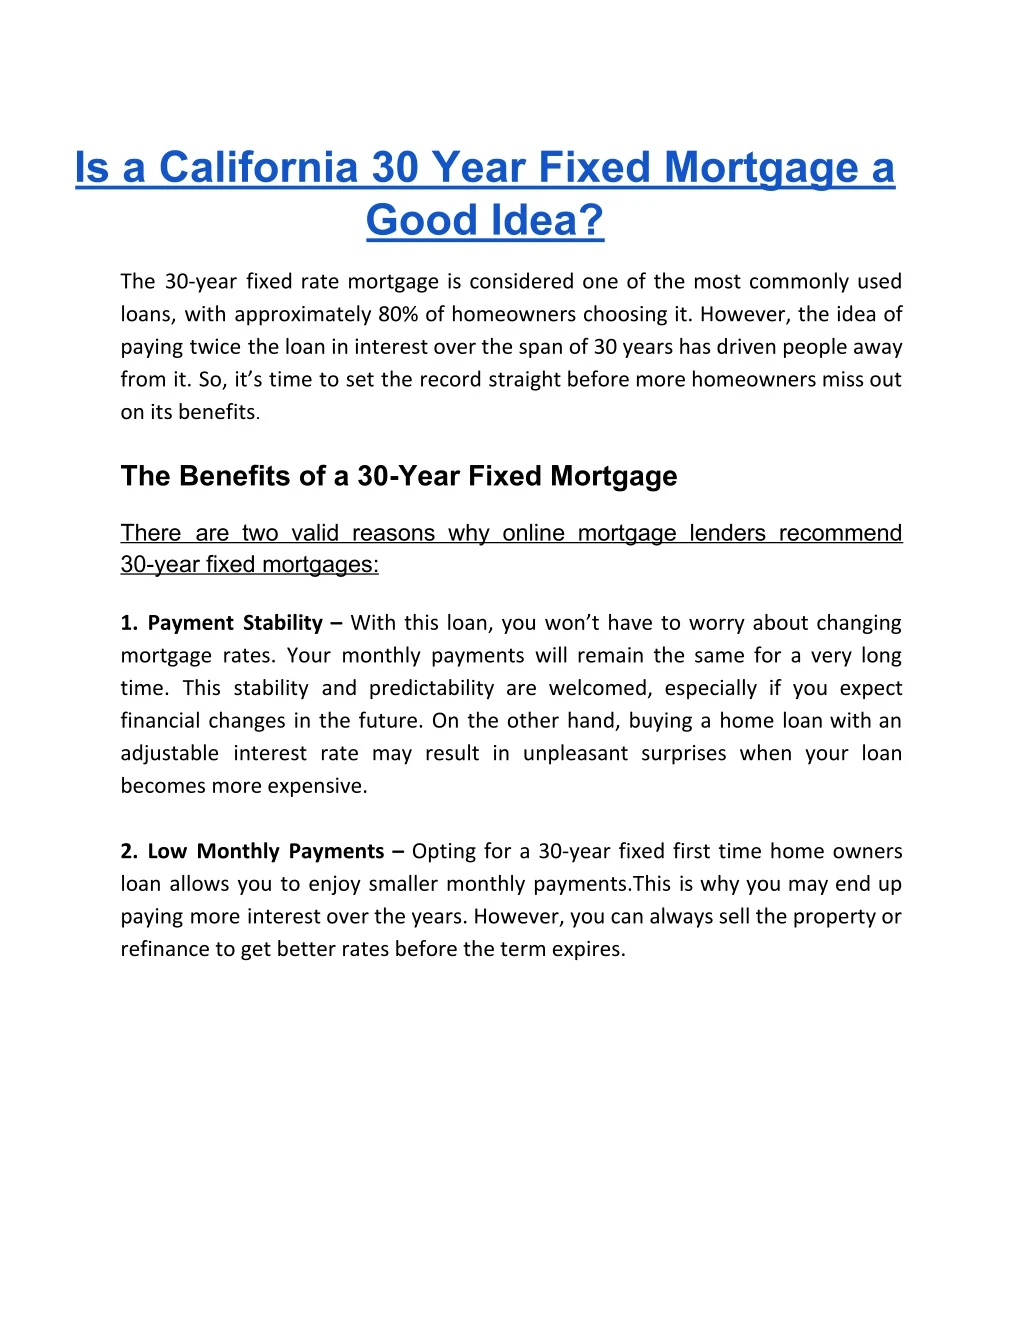 is a california 30 year fixed mortgage a good idea